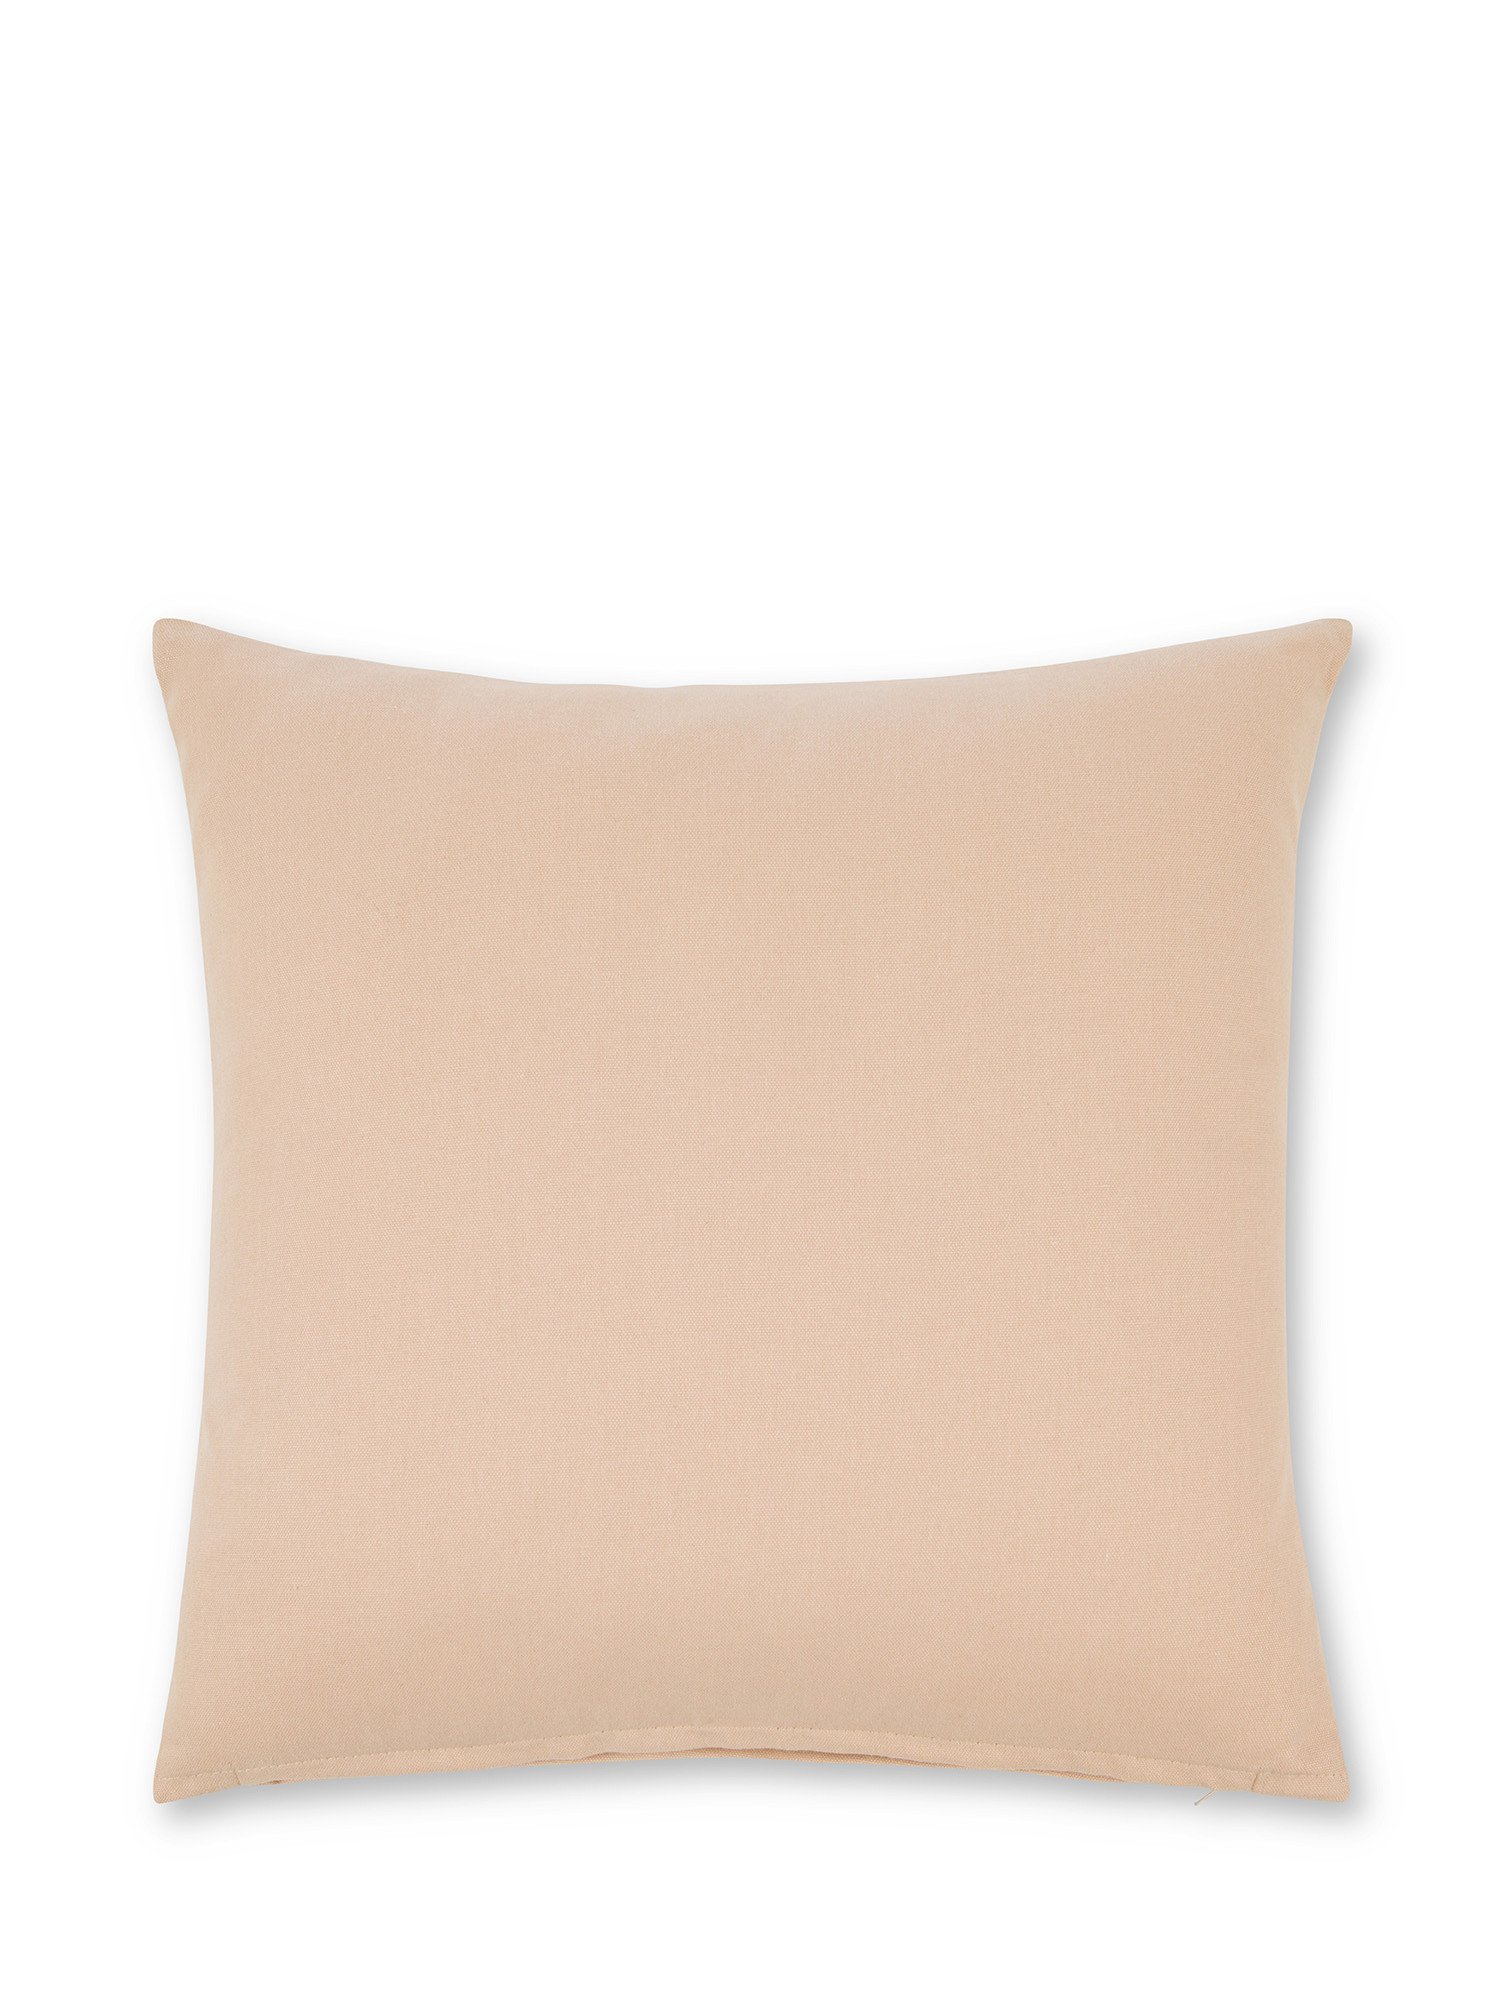 Cuscino cotone con cornice ricamata 45x45cm, Beige chiaro, large image number 1